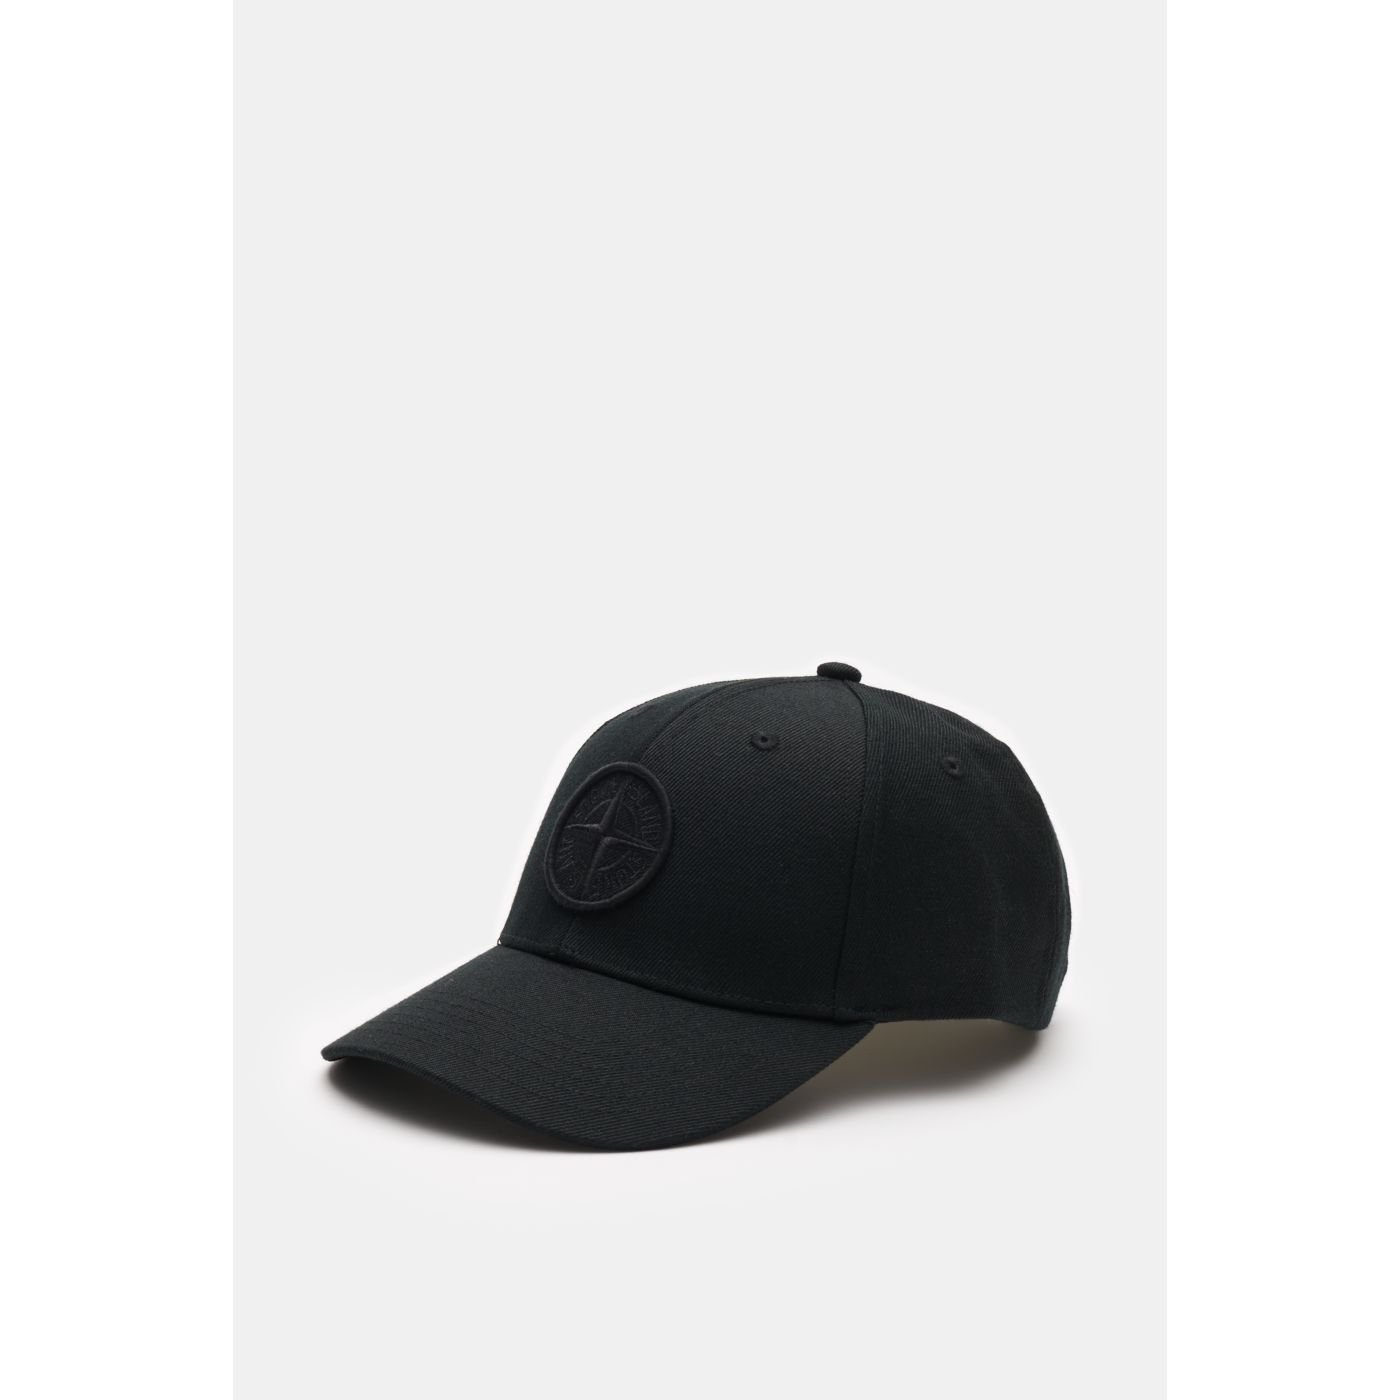 STONE ISLAND baseball cap black | BRAUN Hamburg